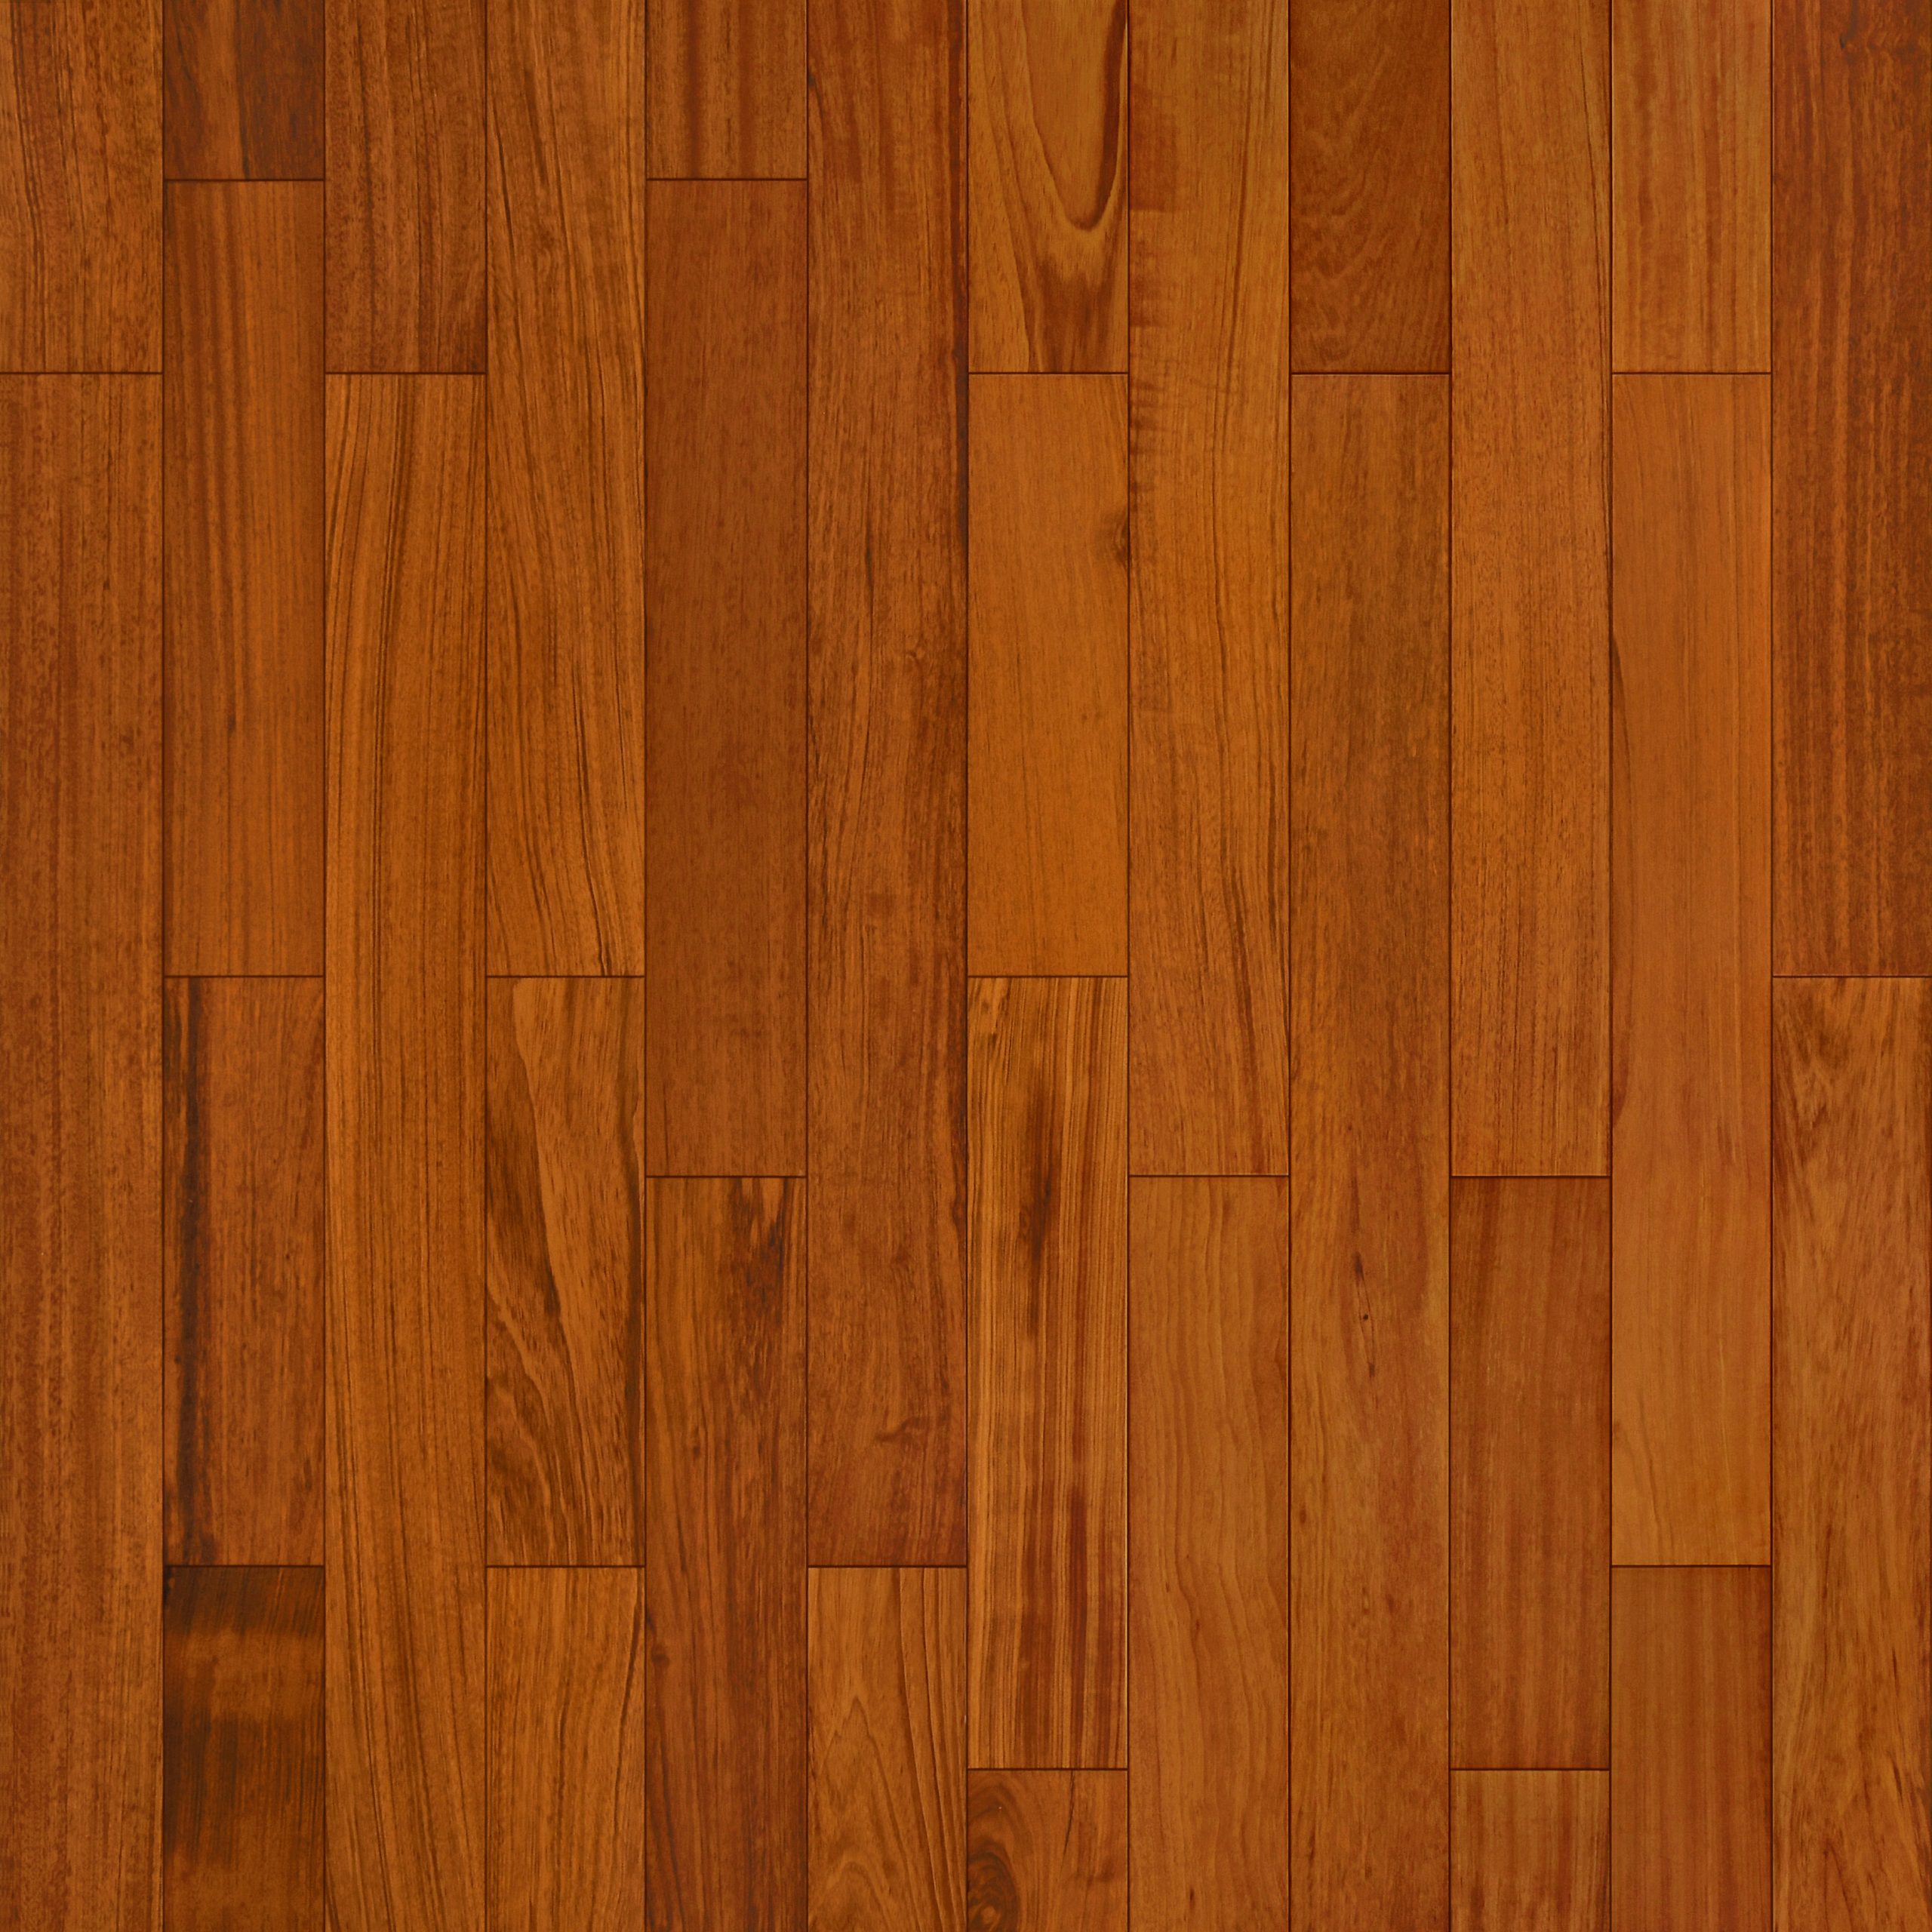 Brazilian Cherry Flooring 5 Wide, Us Floors Brazilian Cherry Engineered Hardwood Flooring